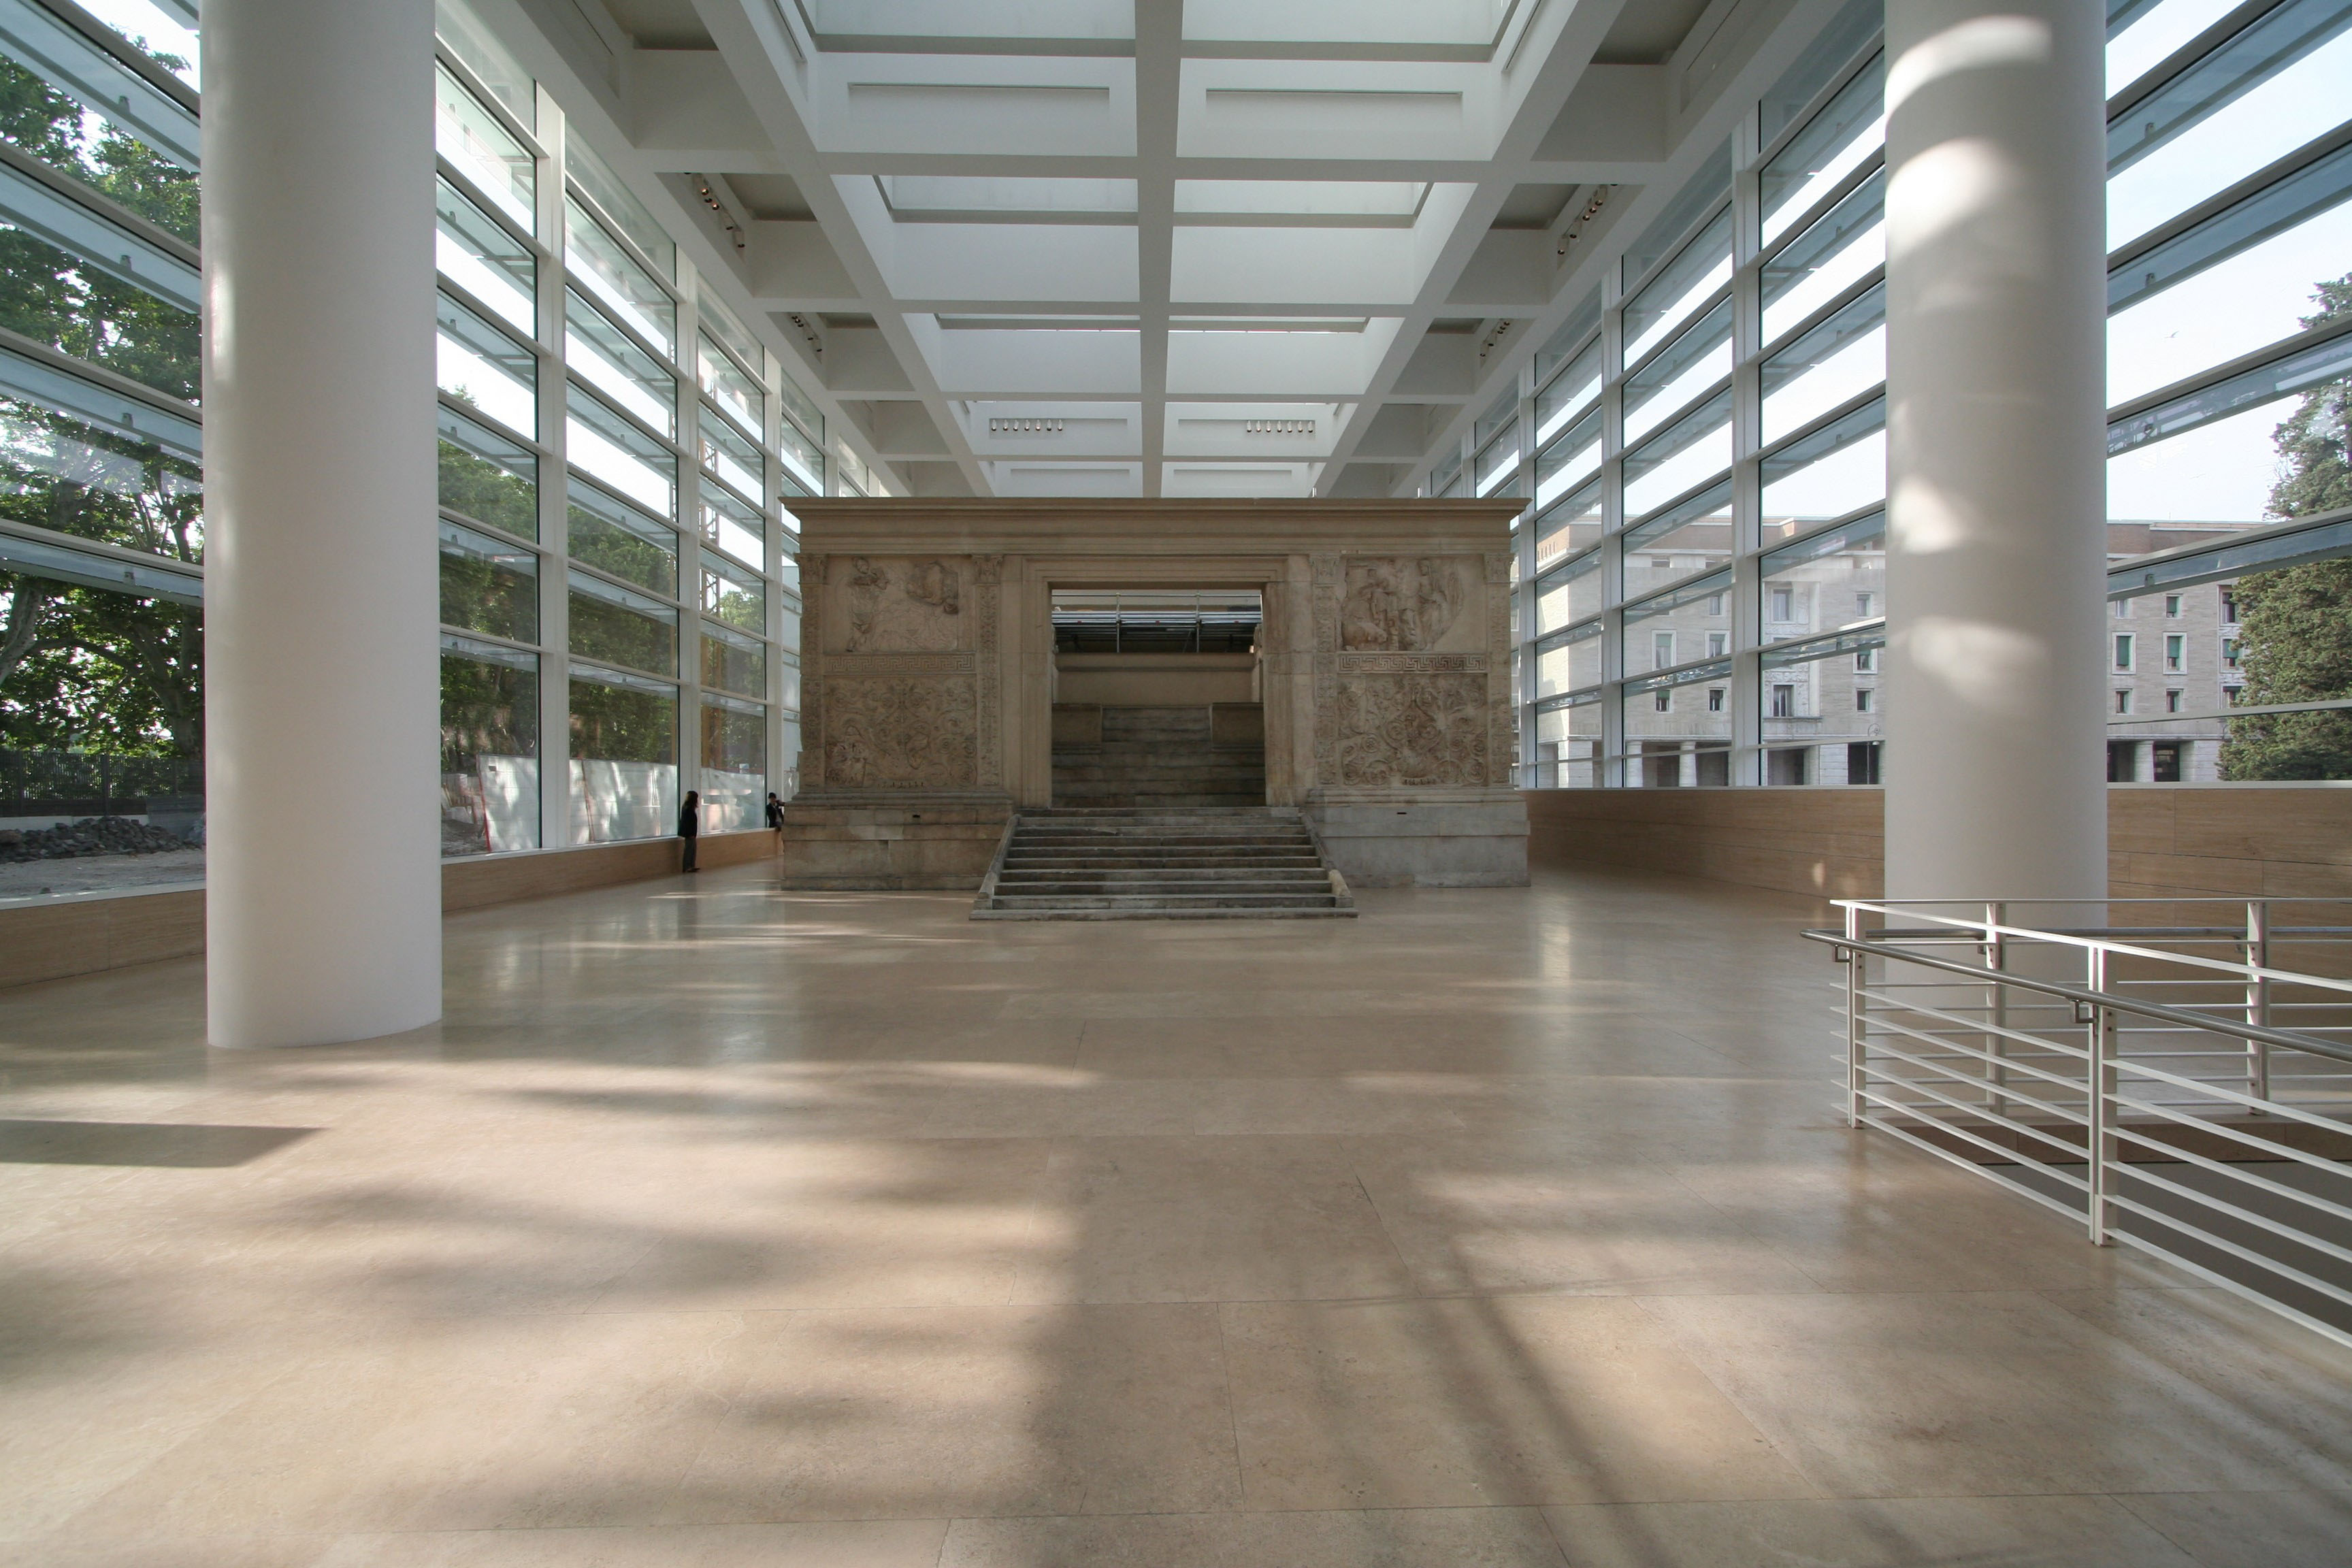 The Ara Pacis Museum - CulturalHeritageOnline.com